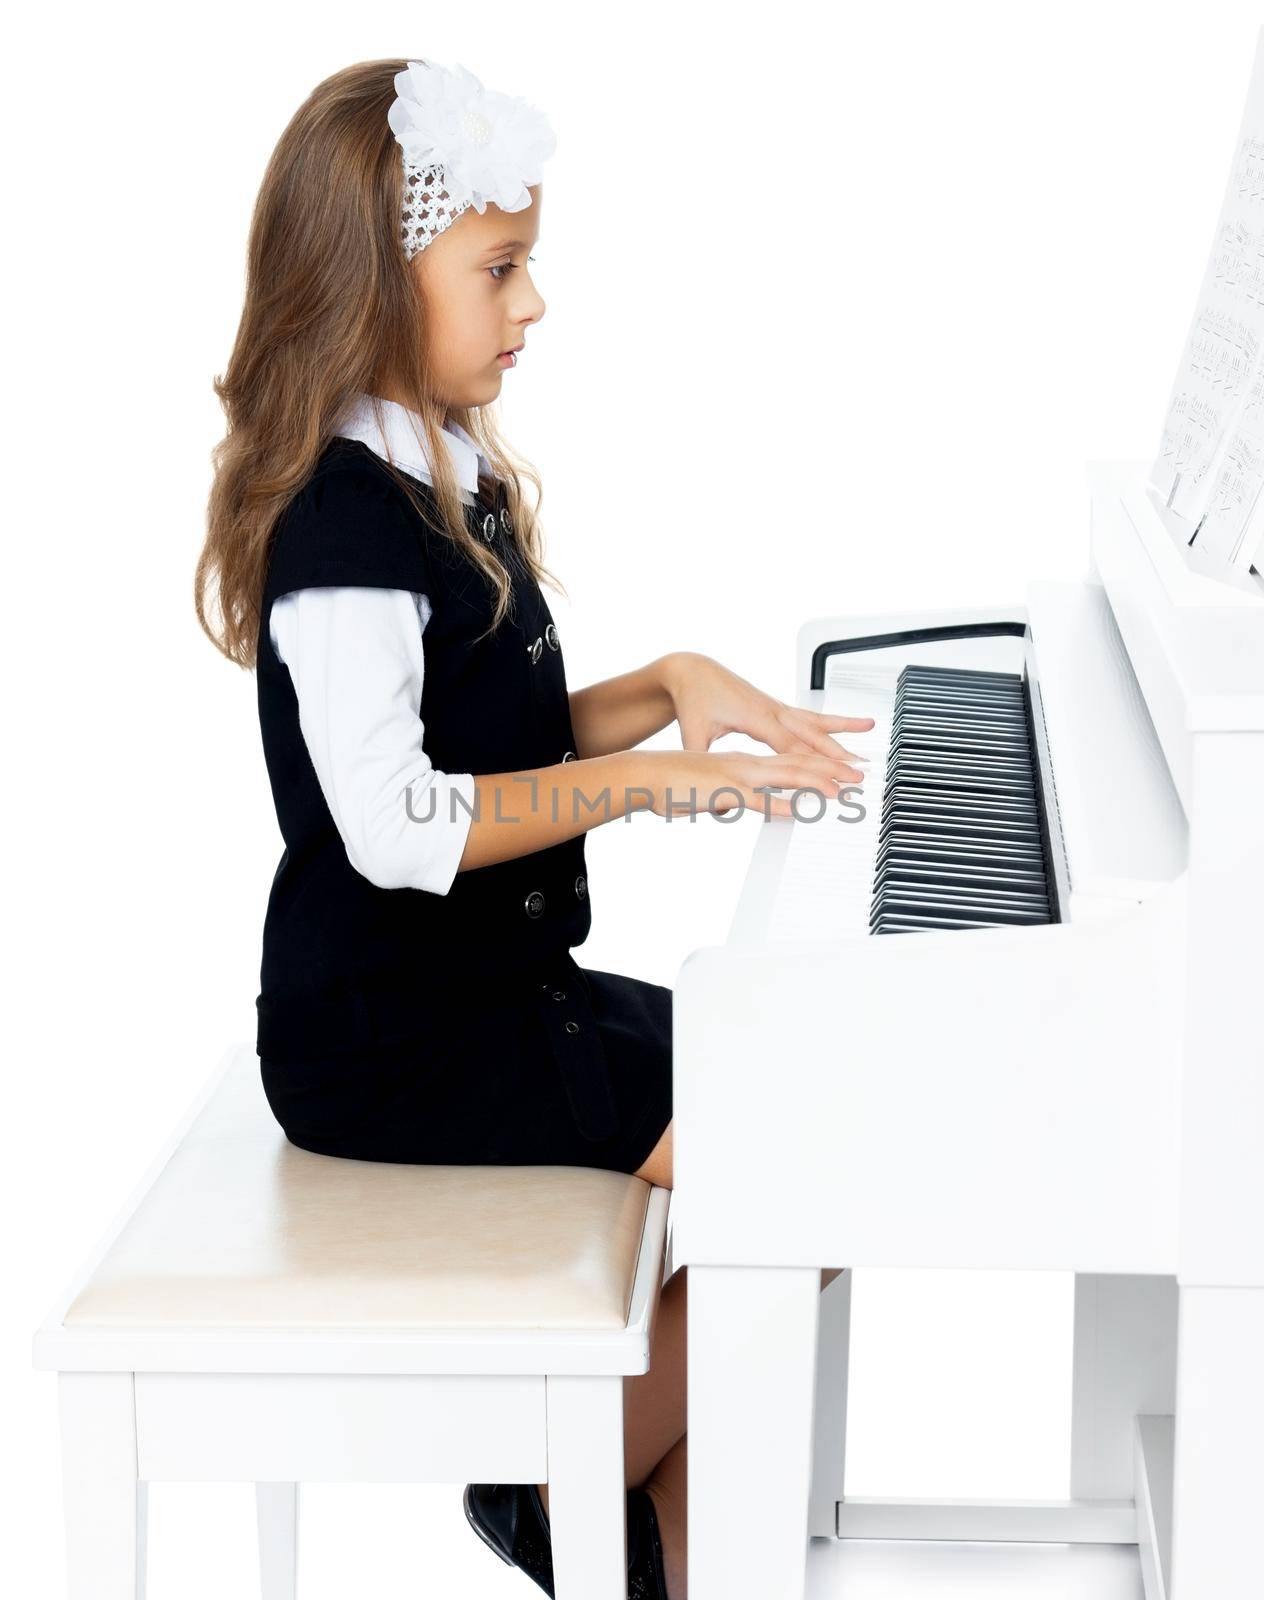 Girl sitting at the piano by kolesnikov_studio